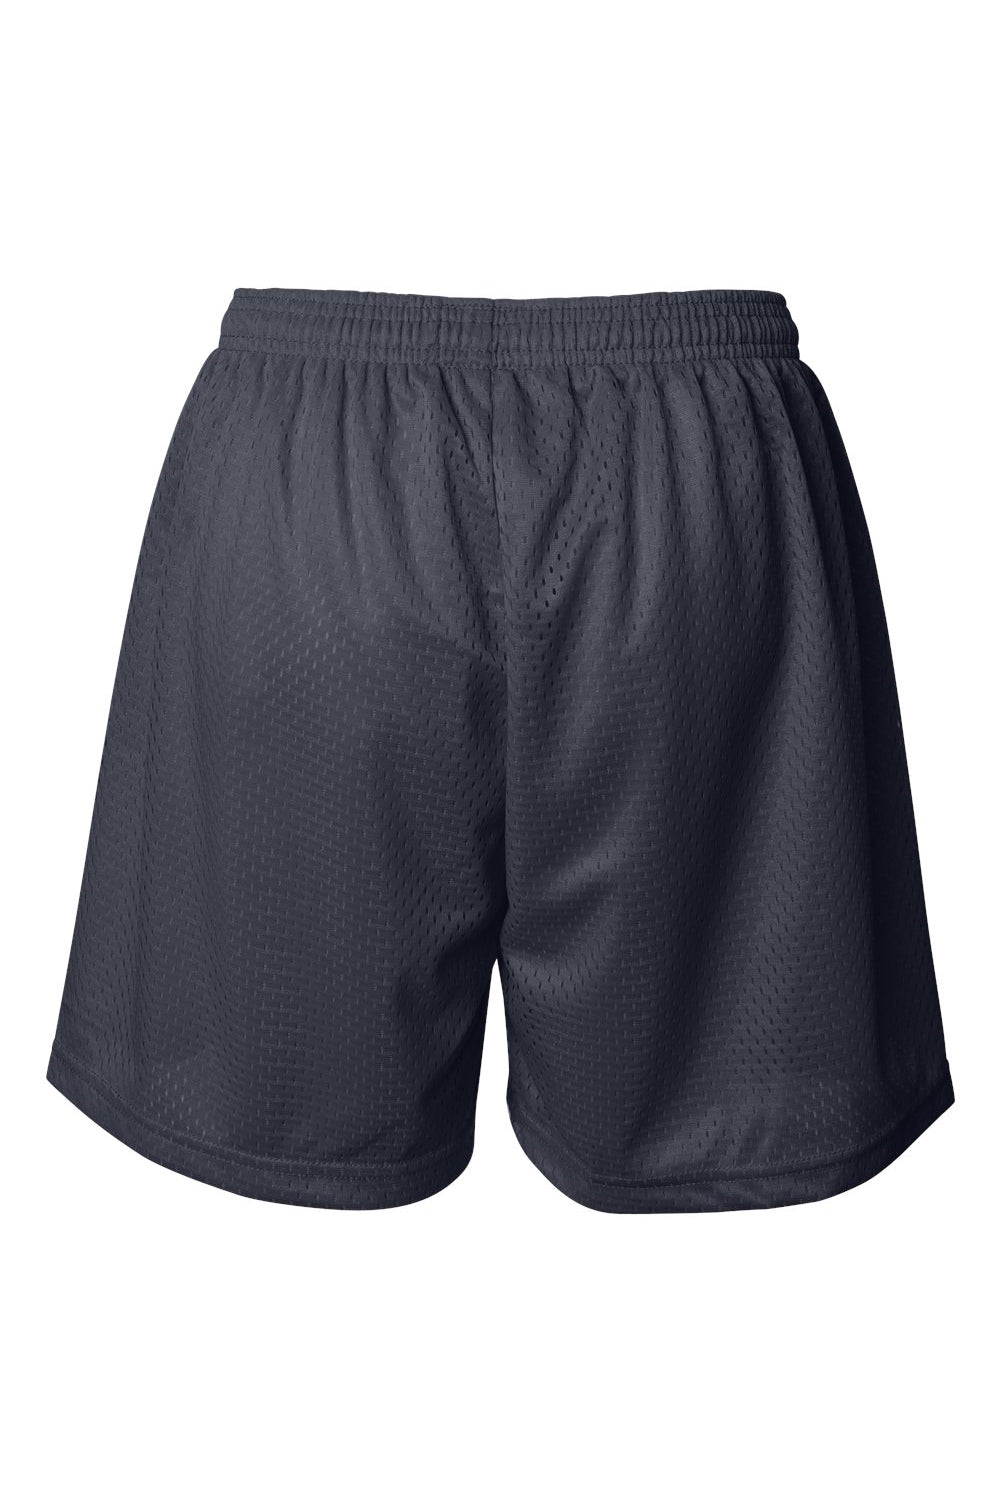 Badger 7216 Womens Pro Mesh Shorts w/ Liner Navy Blue Flat Back